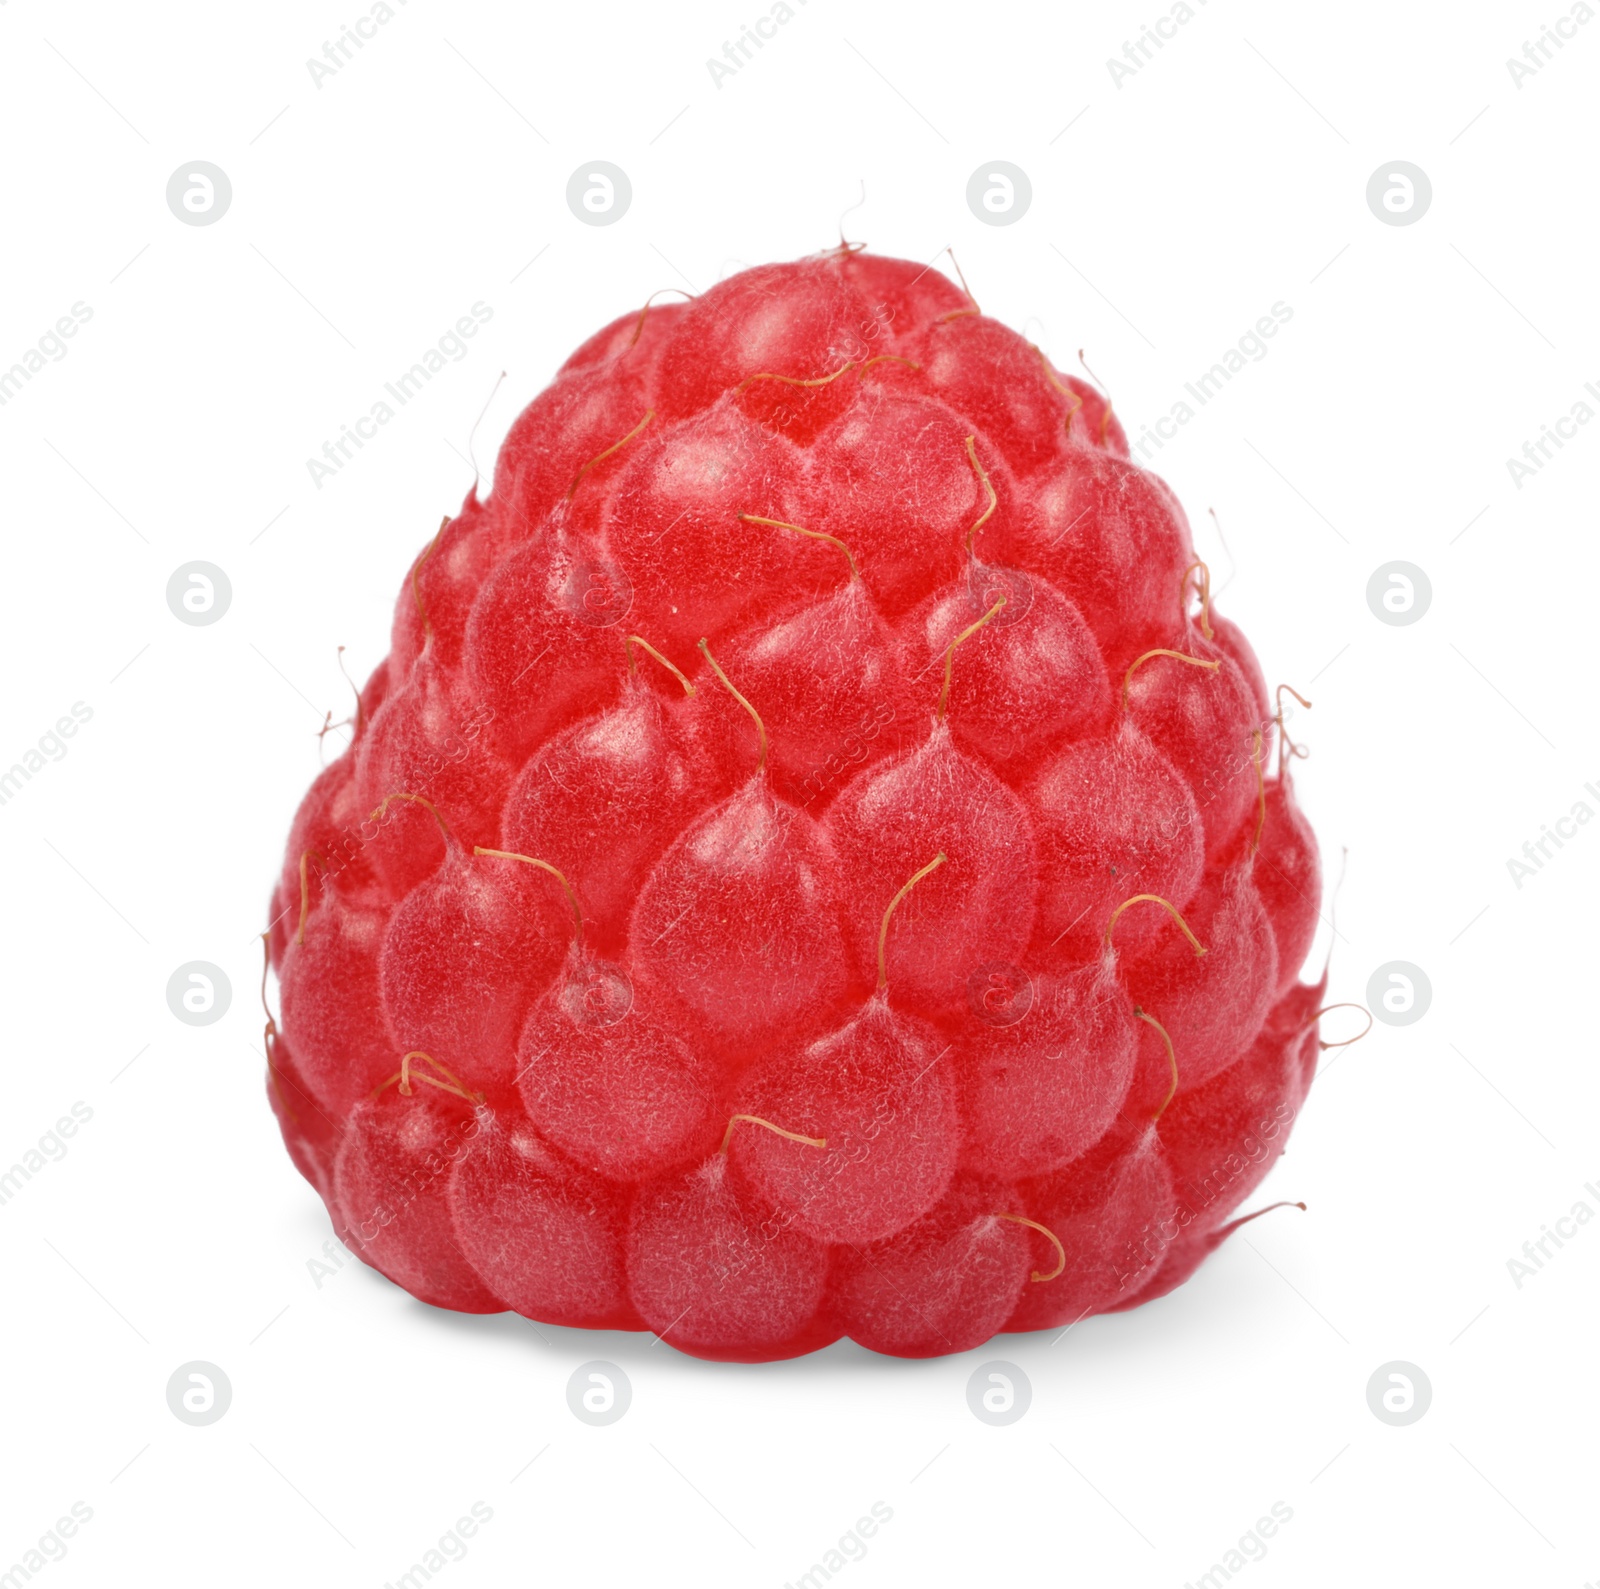 Photo of One tasty ripe raspberry isolated on white